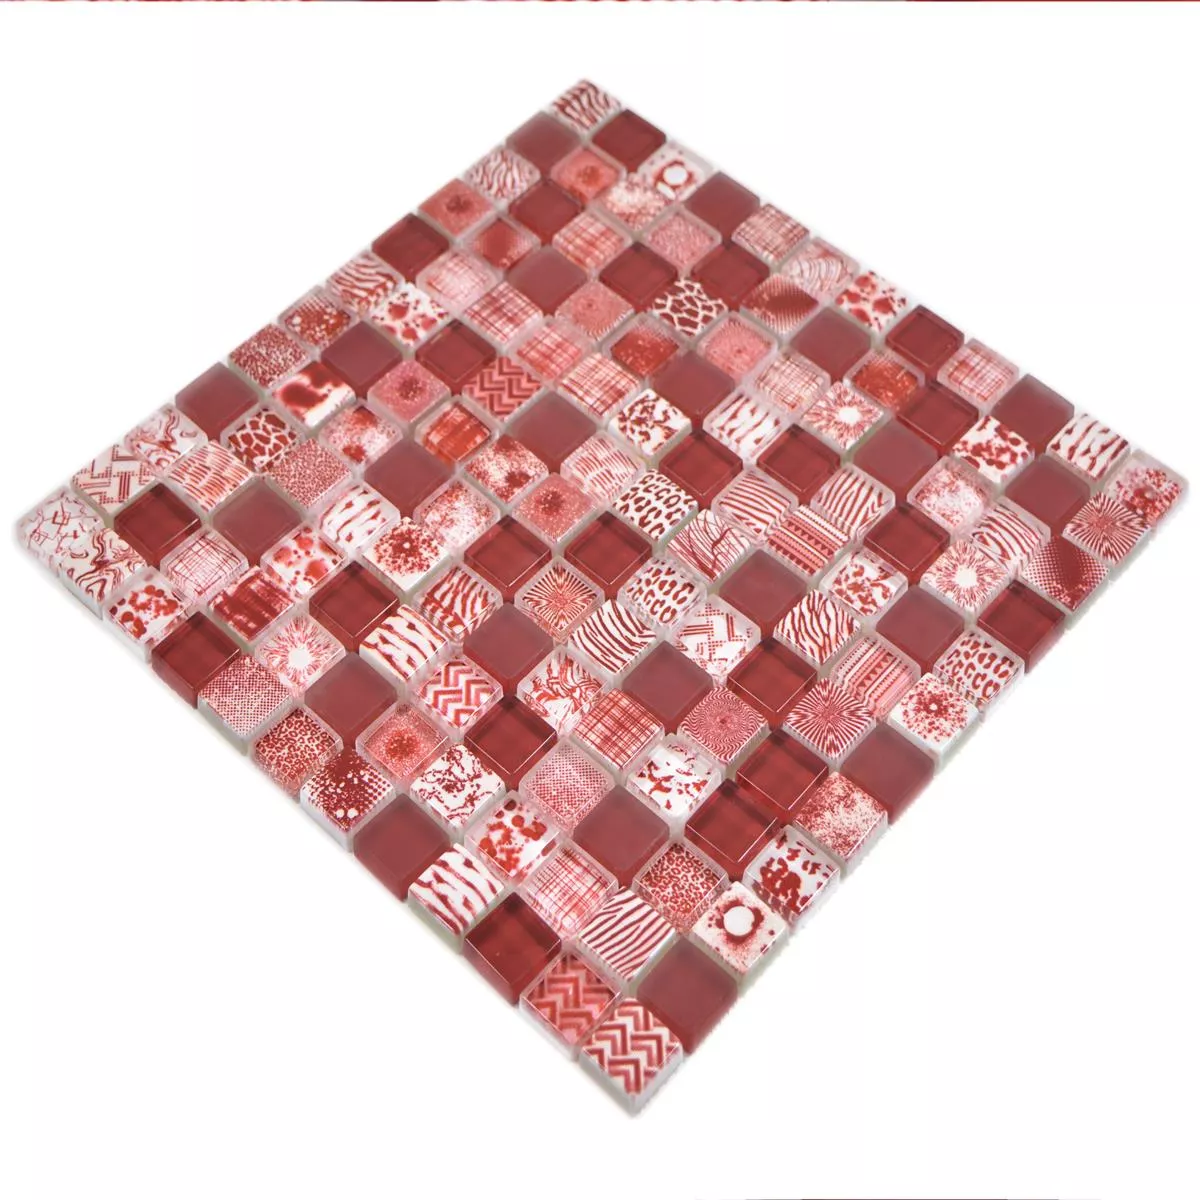 Skleněná Mozaika Dlaždice Cornelia Retro Vzhled Červená